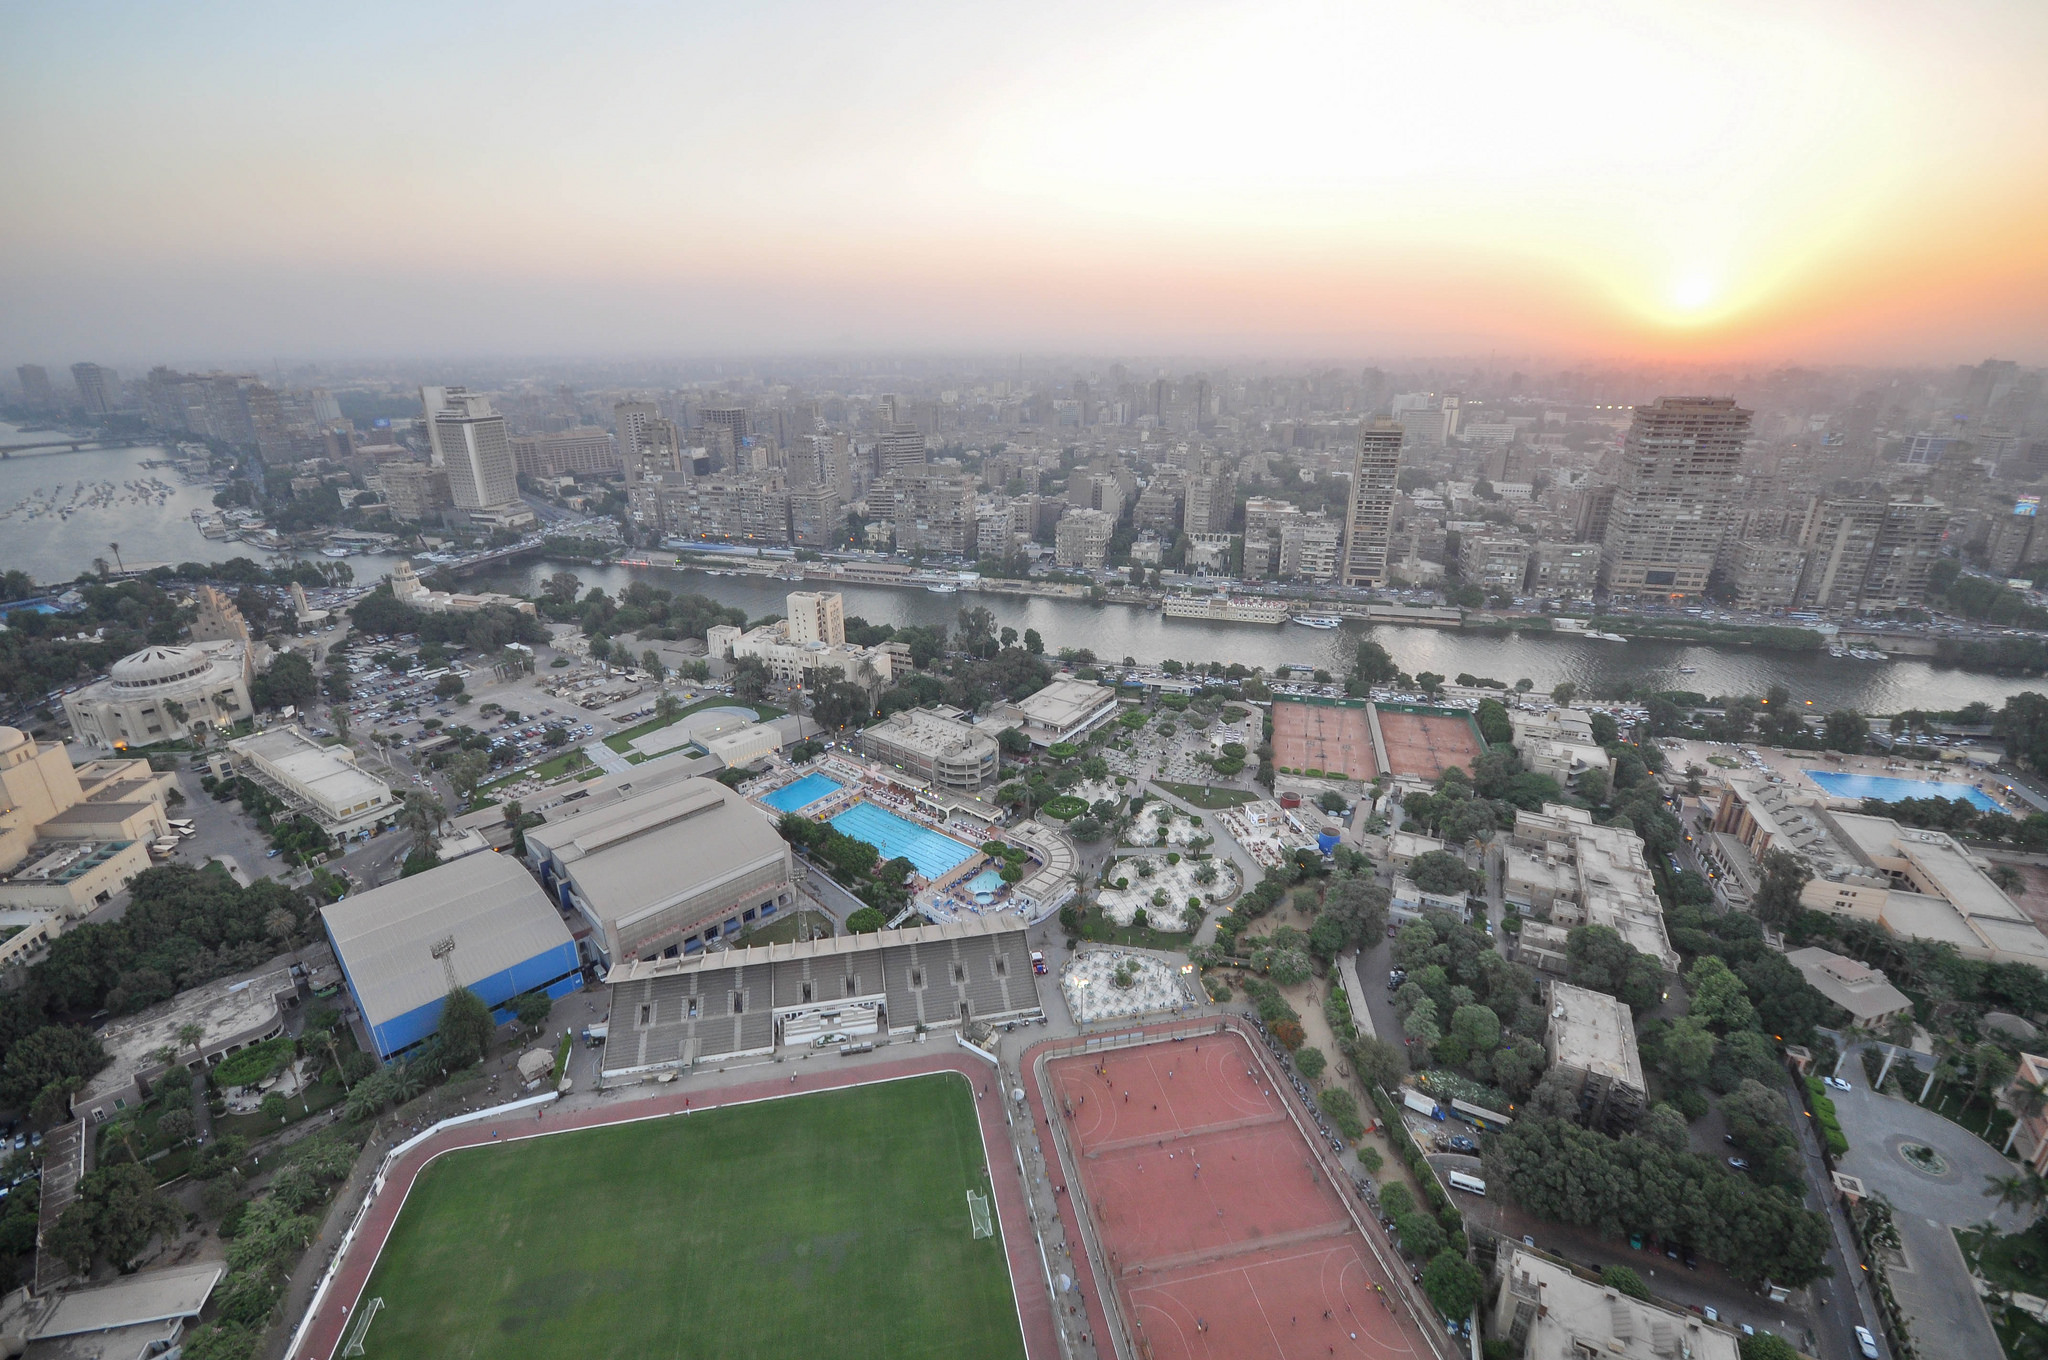 An aerial view of the Gezira Sporting Club. Photo: Jorge Láscar, via Flickr